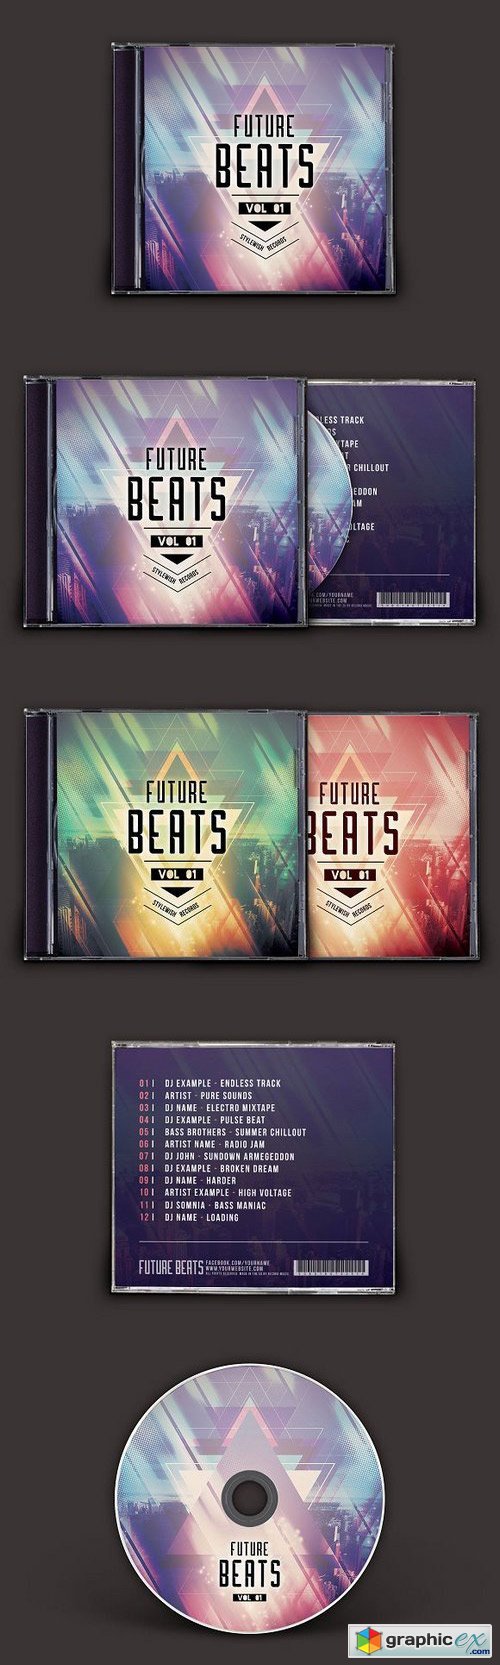 Future Beats CD Cover